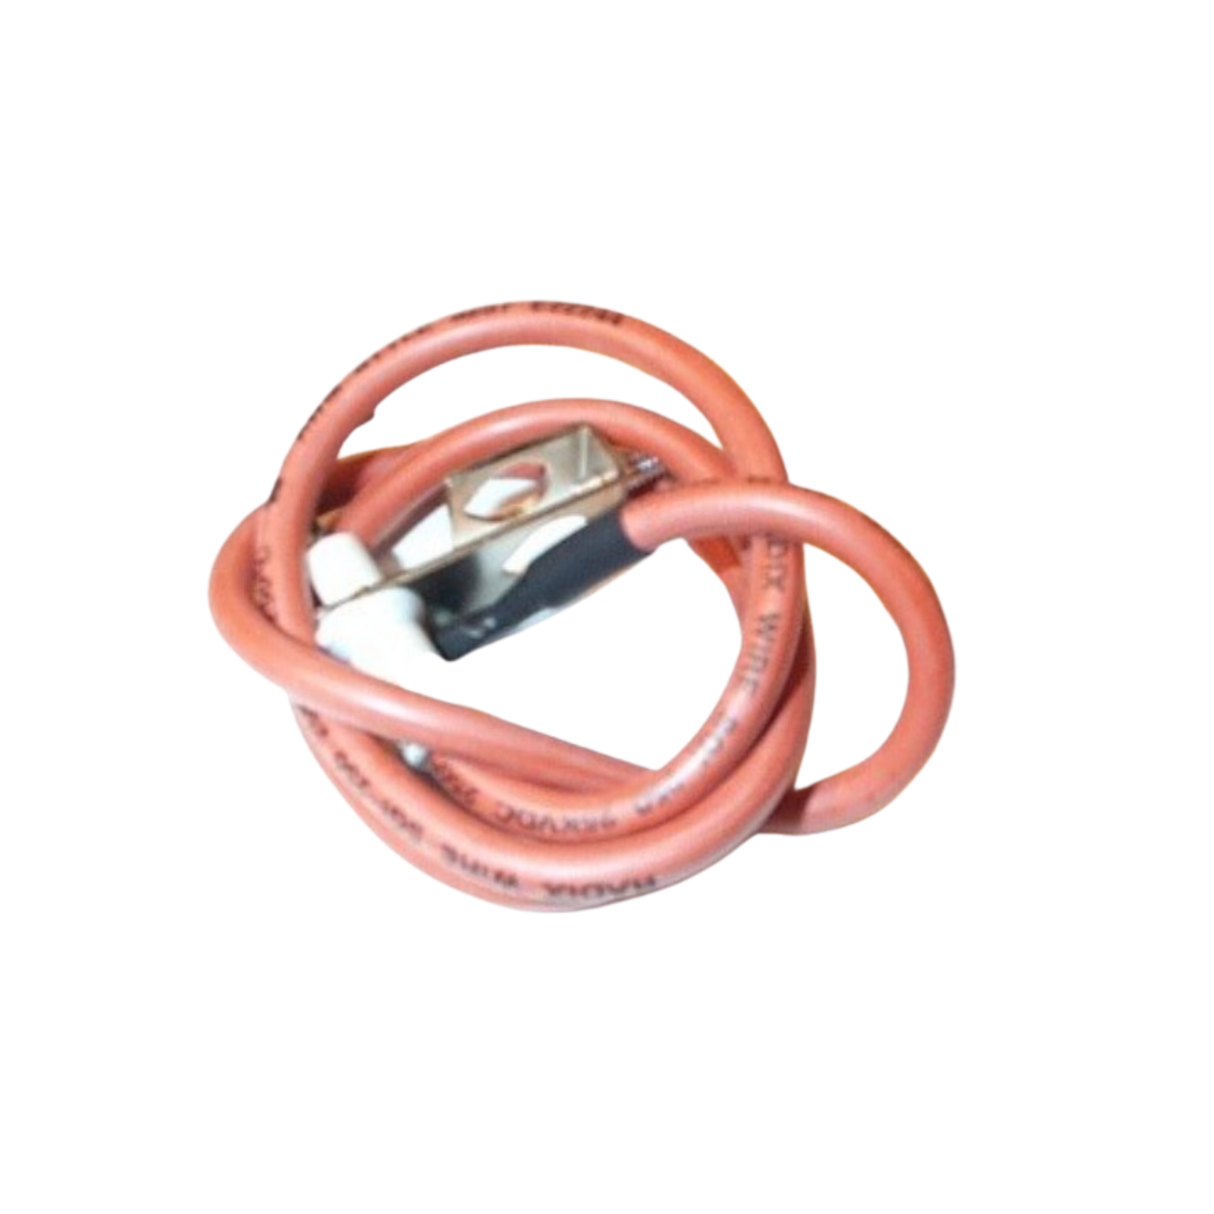 Fenwal 05-100000-250 Standard Electrode/ Heavy Voltage Wire